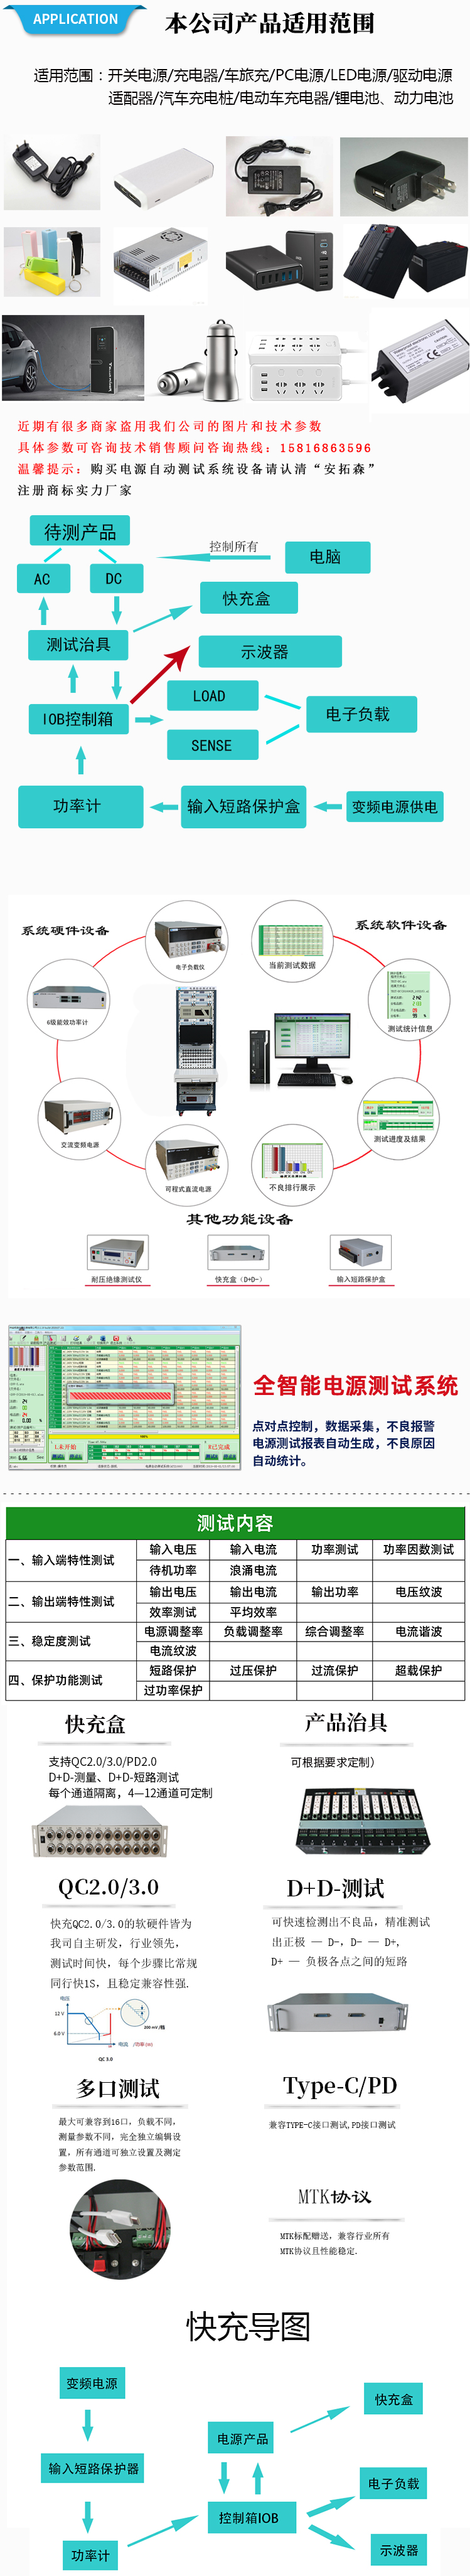 PC电源测试系统